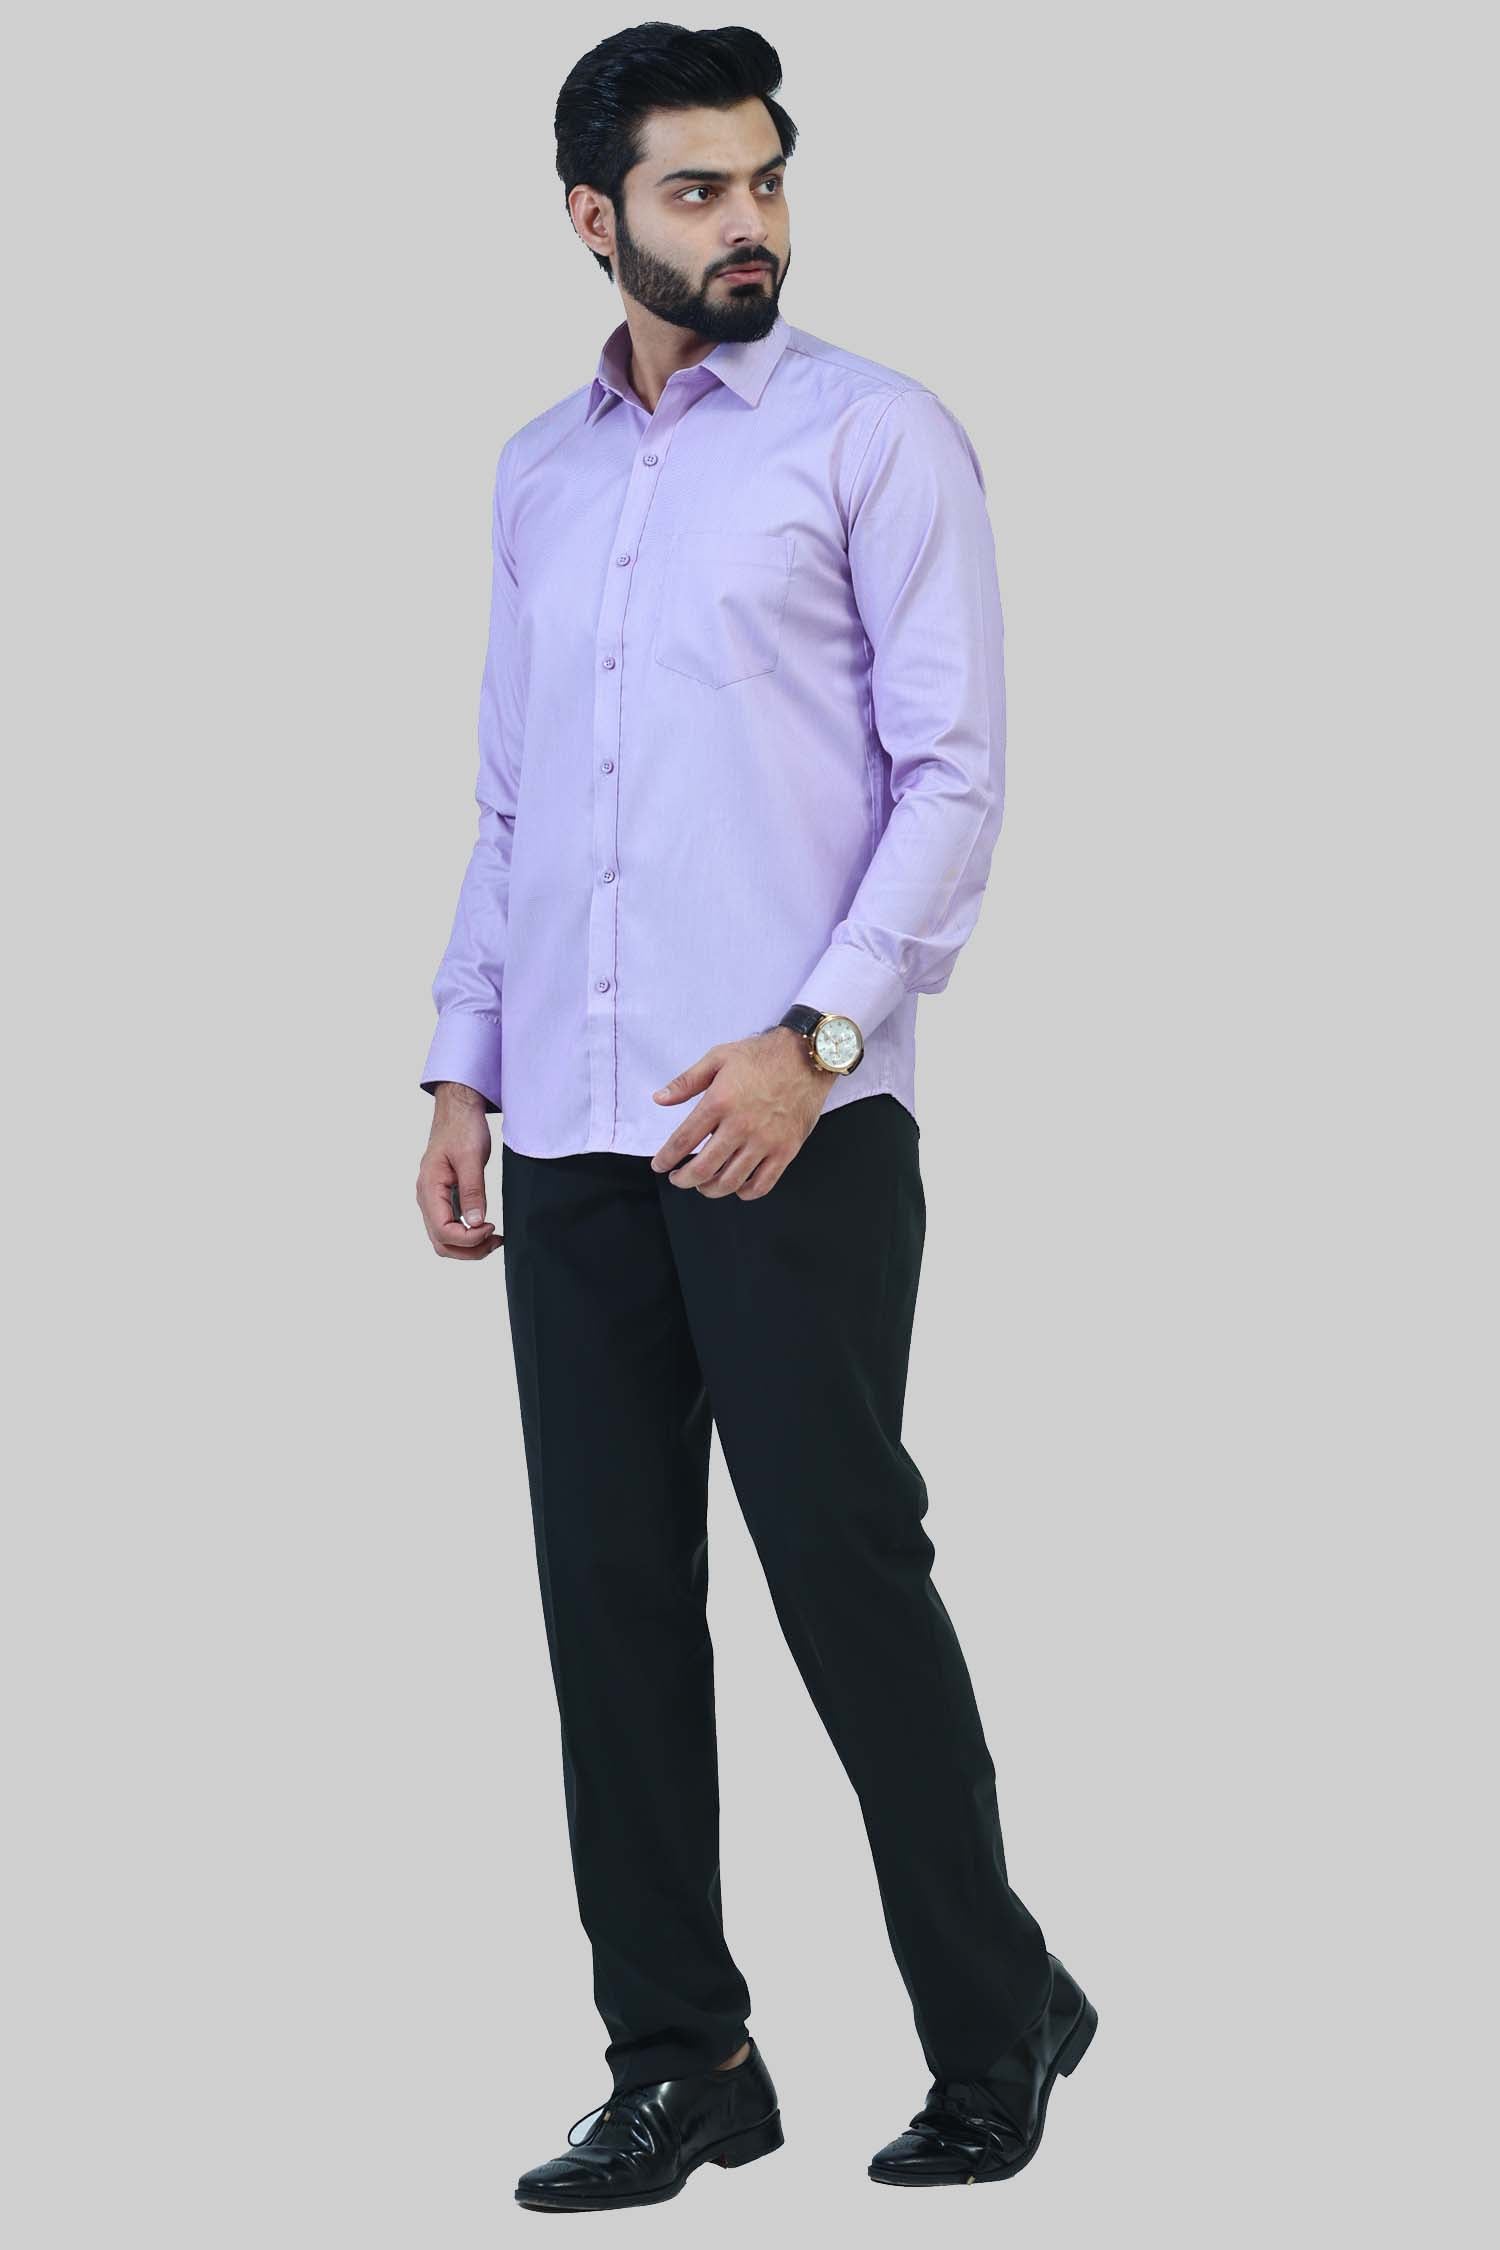 Men Purple Vertical Striped Formal Shirt, Men Lining Shirt, Gents Stripped  Shirts, पुरुषों की धारीदार शर्ट - NOZ2TOZ, New Delhi | ID: 2851320663597